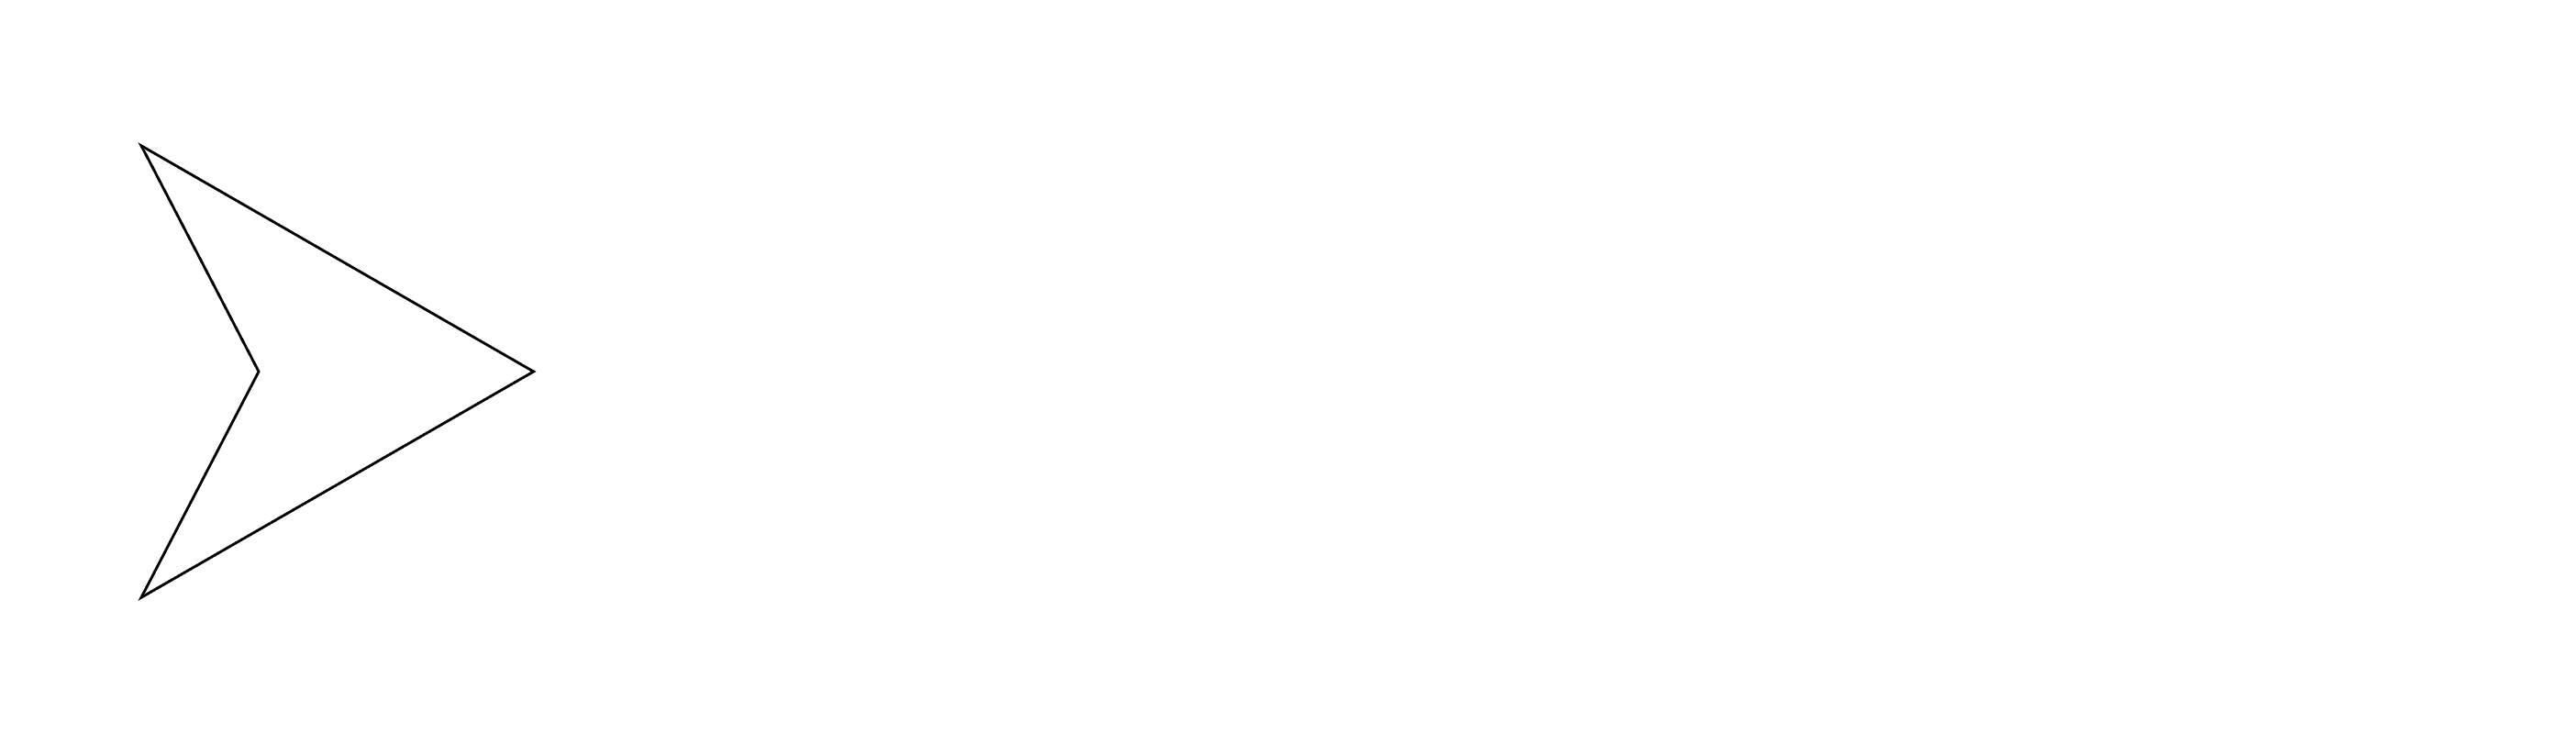 Fluent Search logo